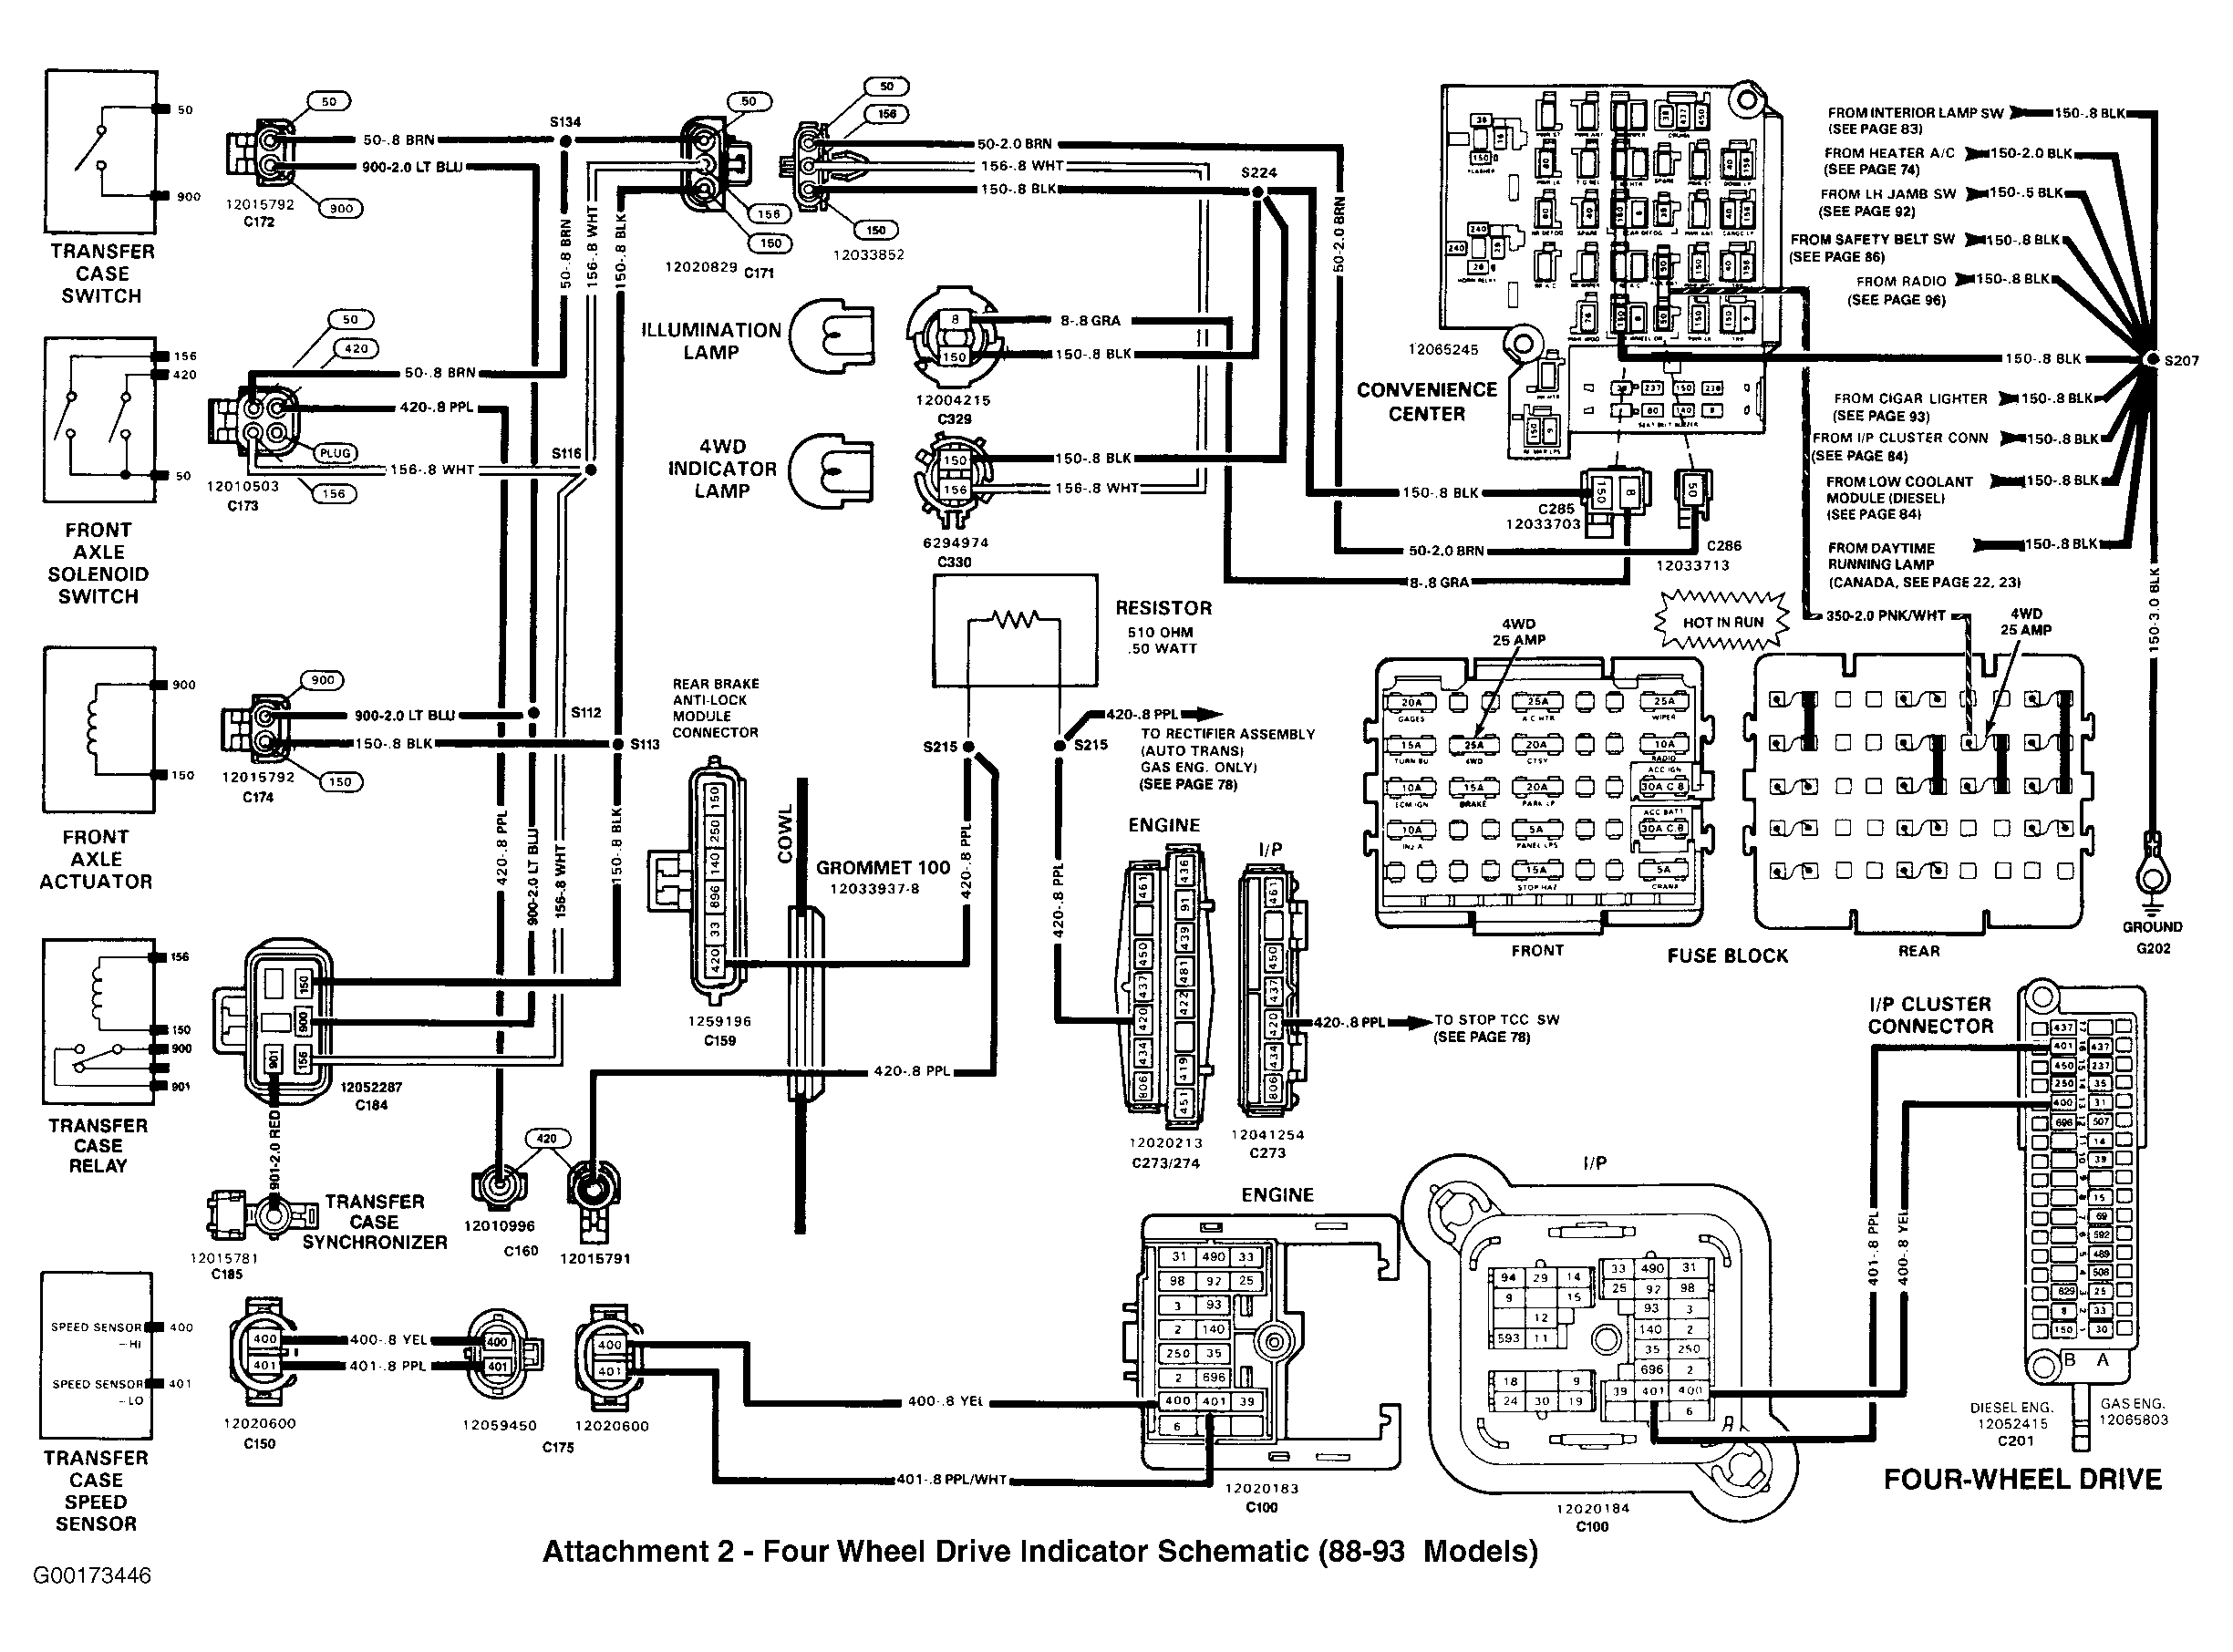 1990 Chevy 4X4 Actuator Wiring Diagram from blazerforum.com